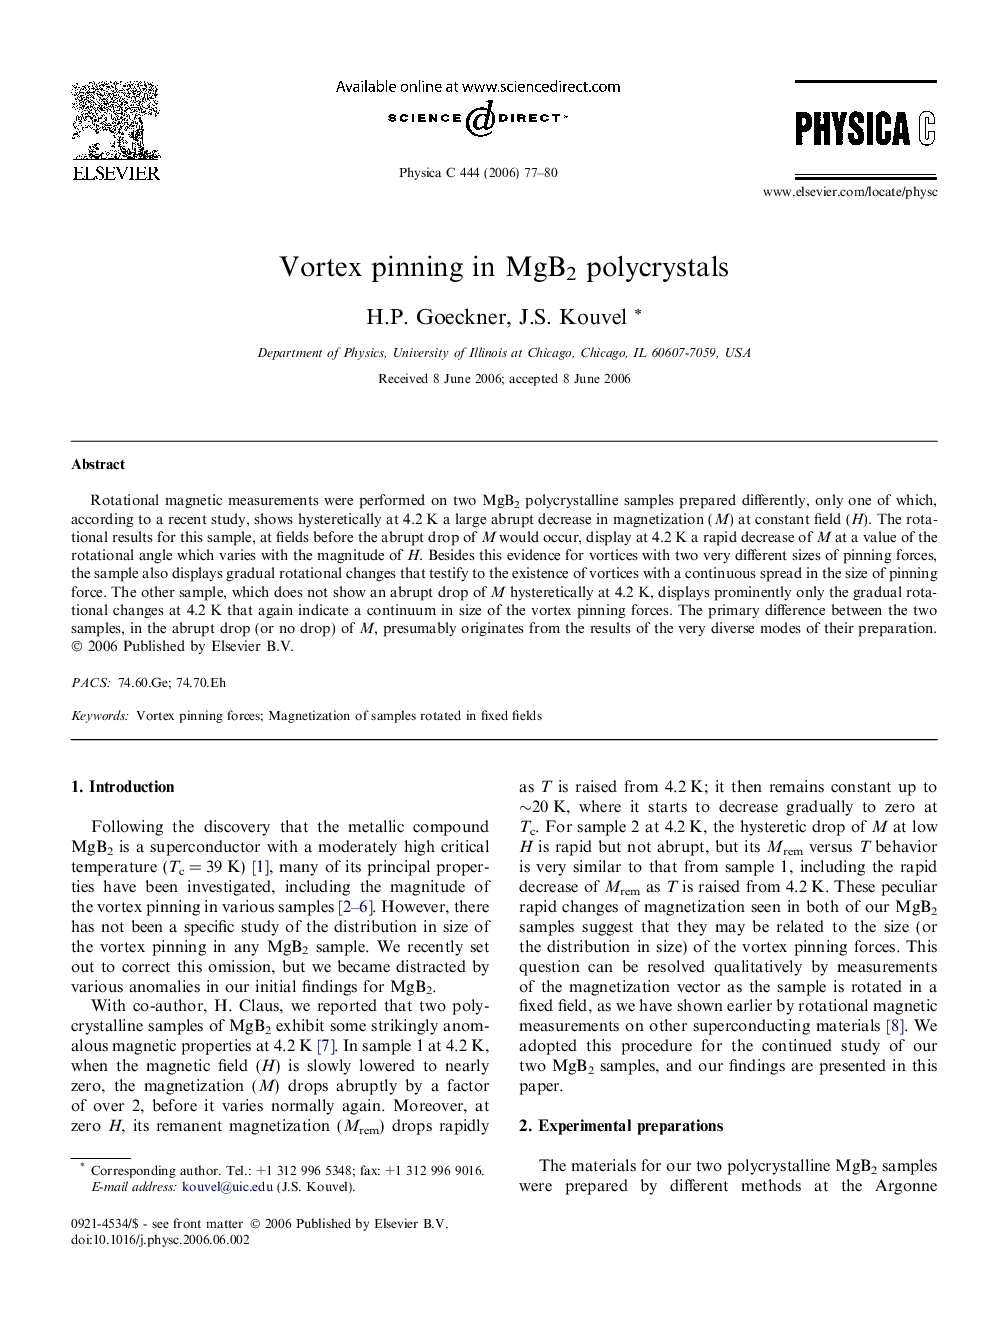 Vortex pinning in MgB2 polycrystals